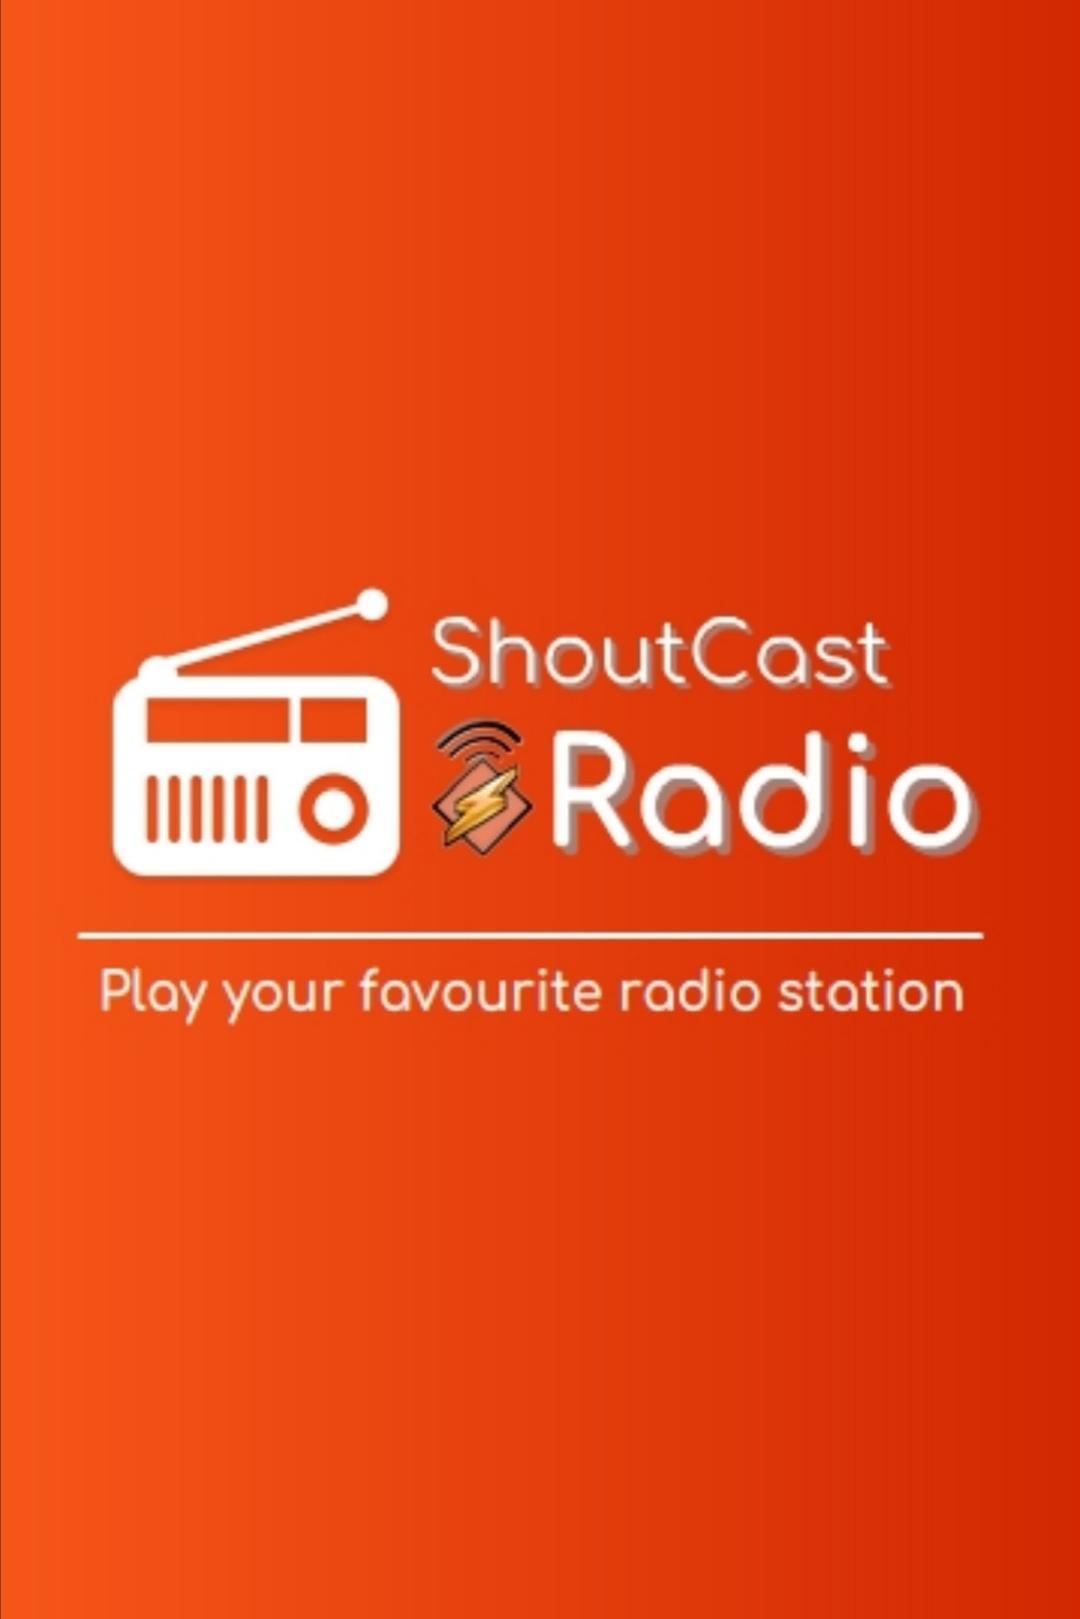 Shoutcast Internet Radio Player Fm Online For Android Apk Download